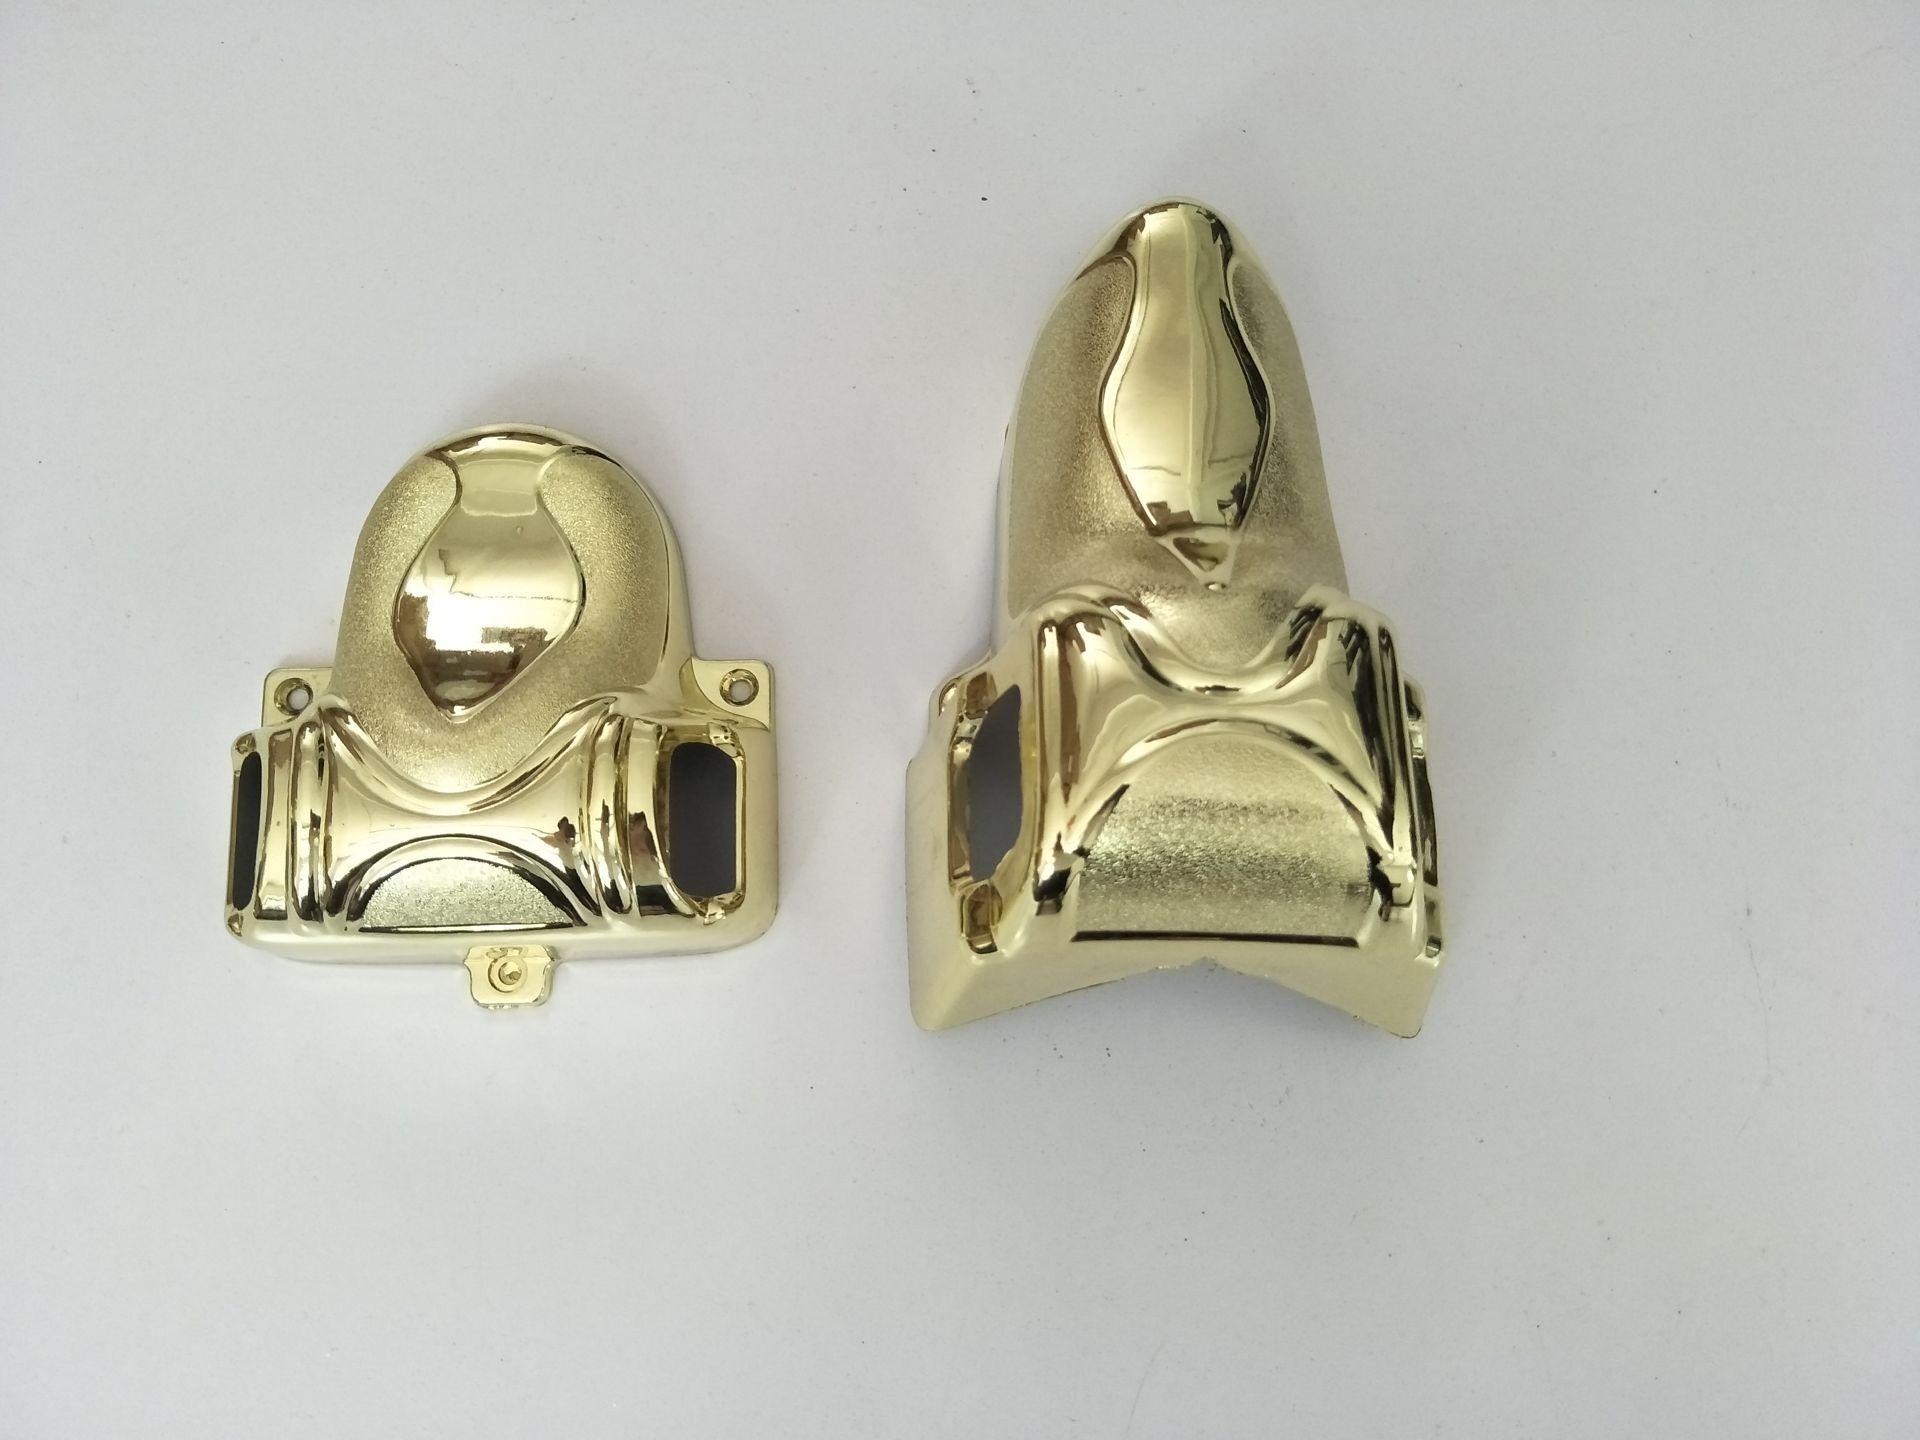  Unique Plastic Casket Corner in Gold finish color HW-5# Manufactures